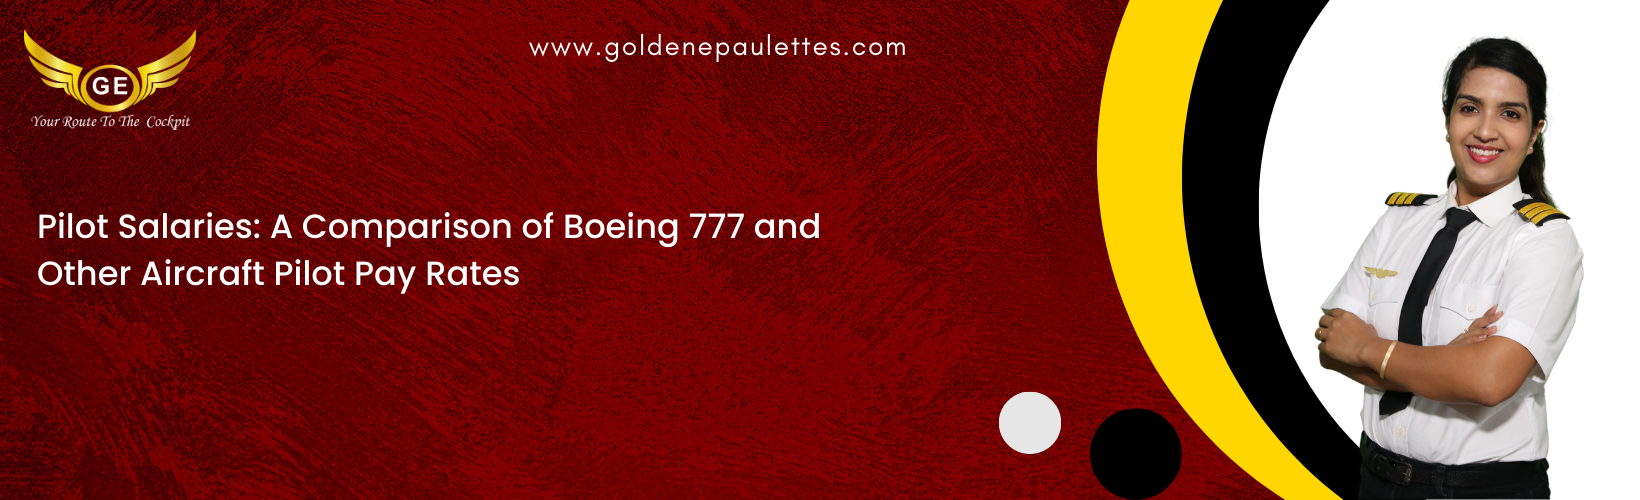 Boeing 777 Pilot Salaries